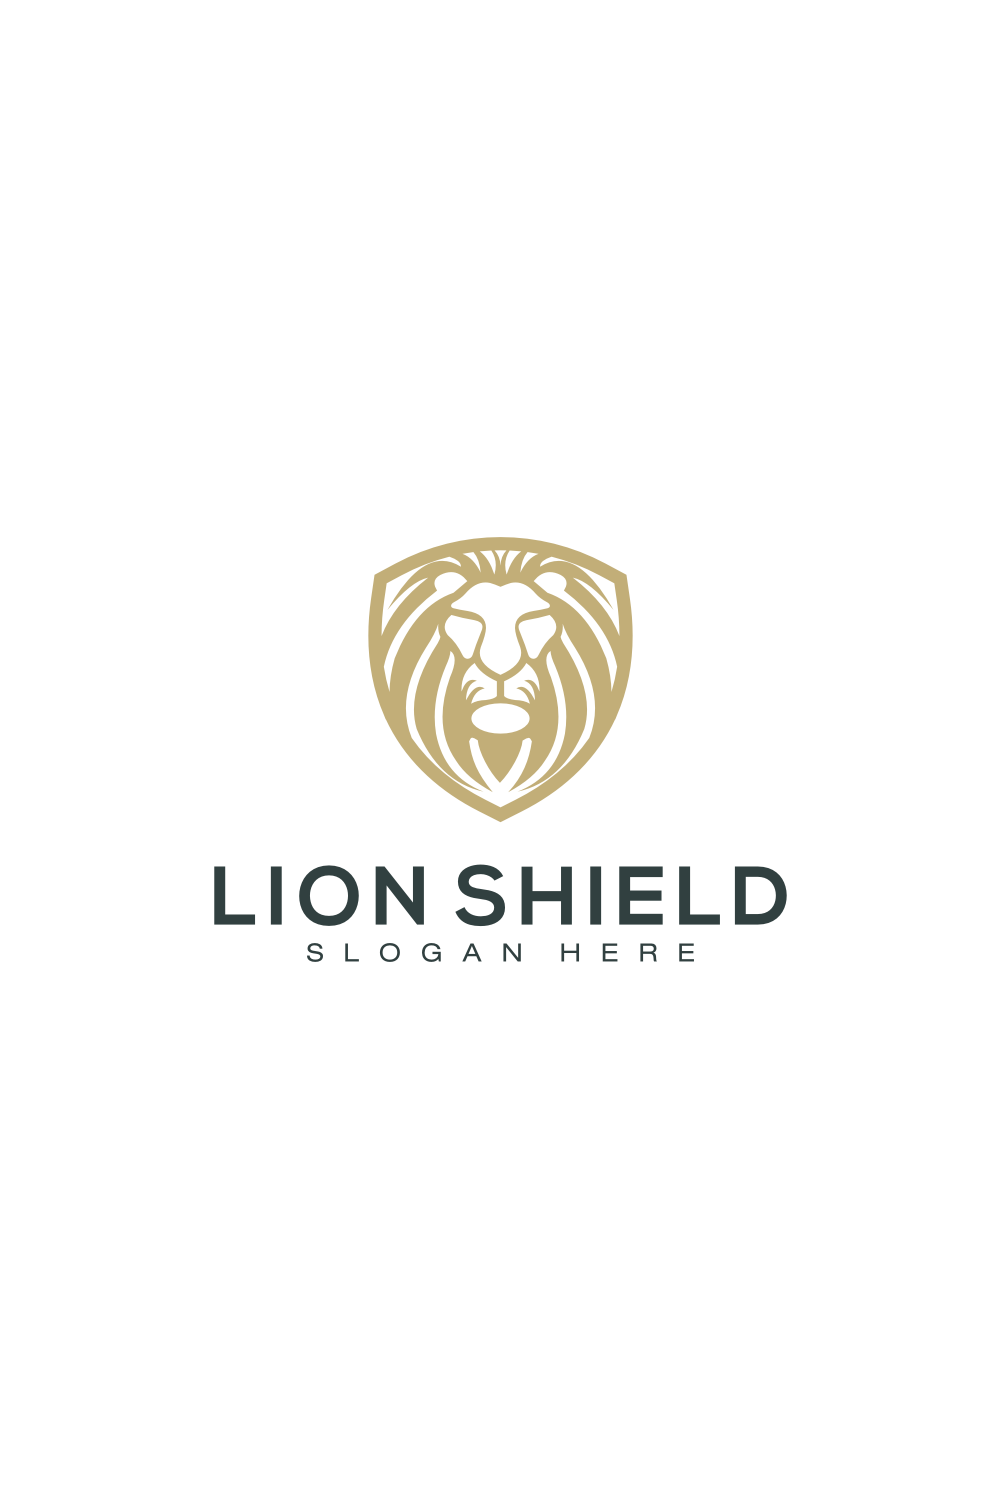 lion shield.